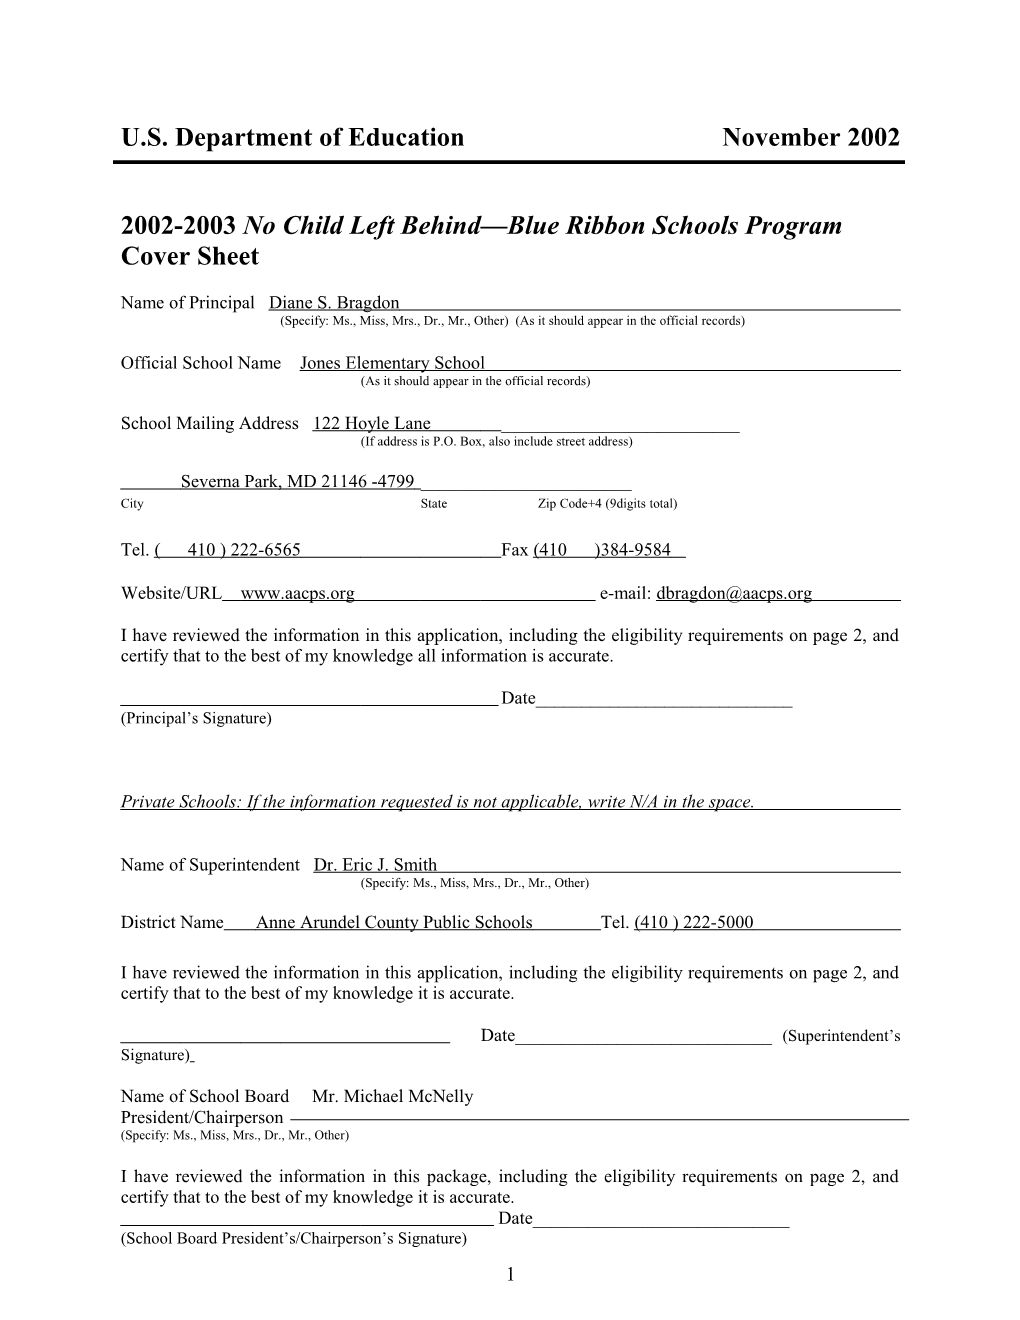 Jones Elementary School 2003 No Child Left Behind-Blue Ribbon School (Msword)